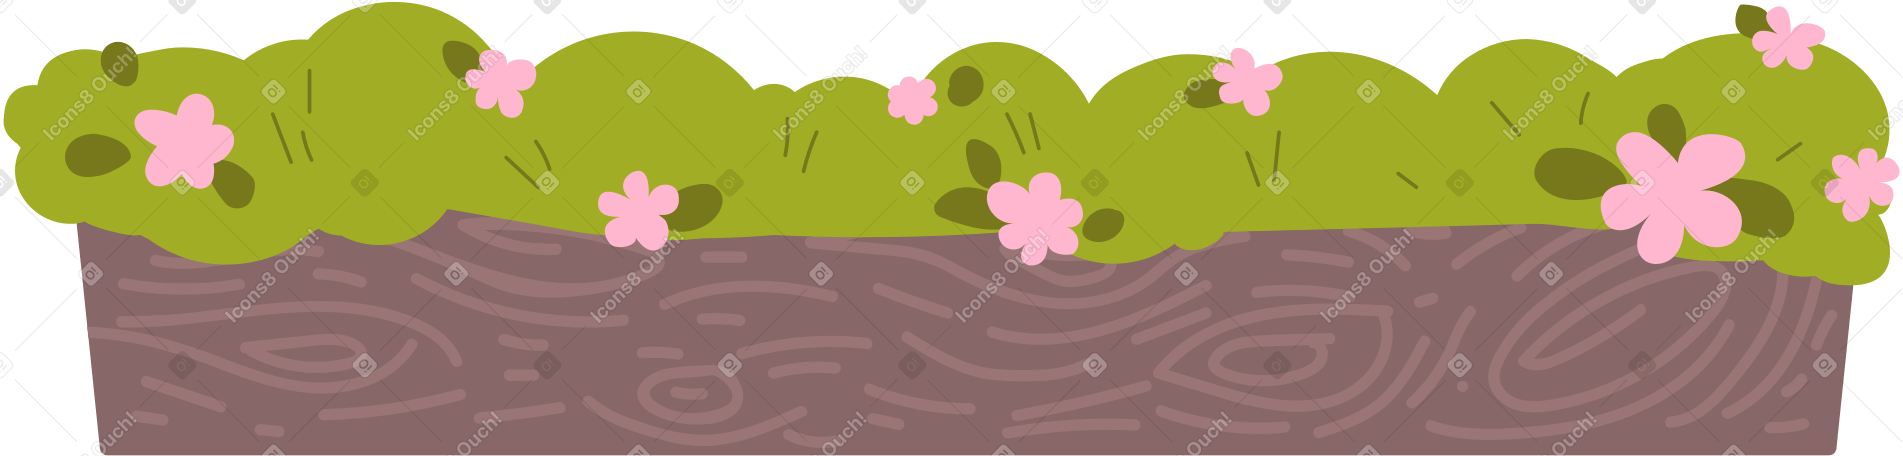 flowers in pots Illustration in PNG, SVG